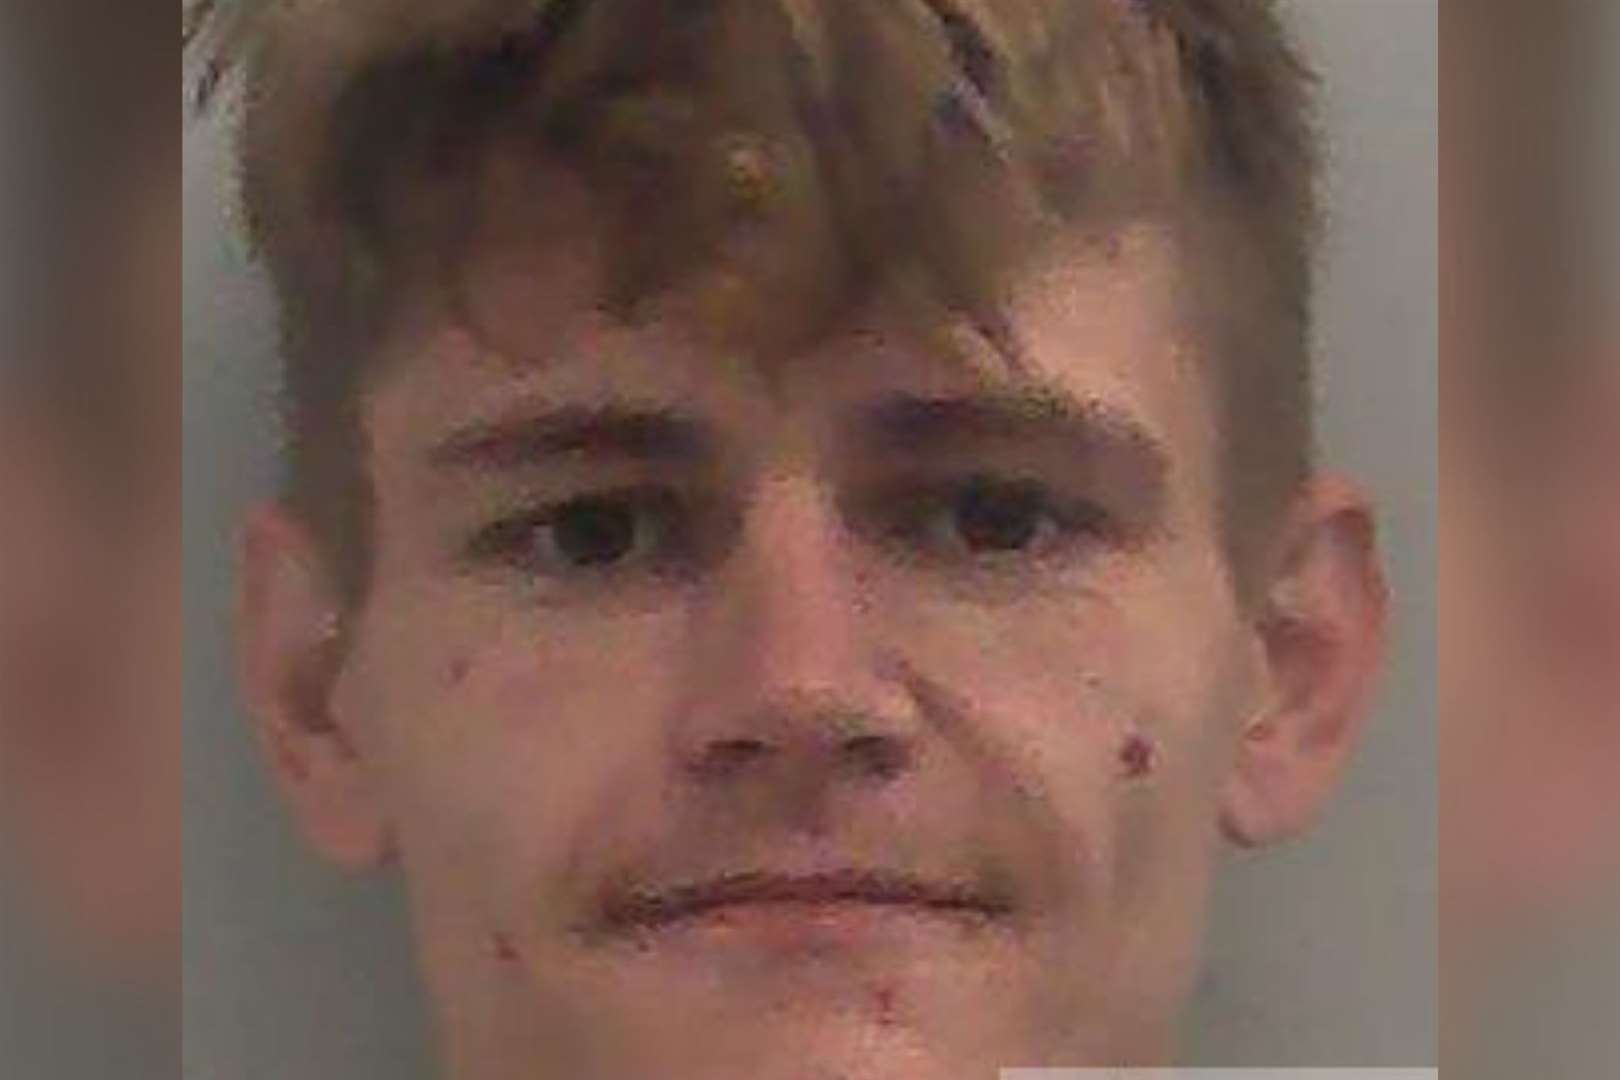 Matthew Lycett has been put behind bars